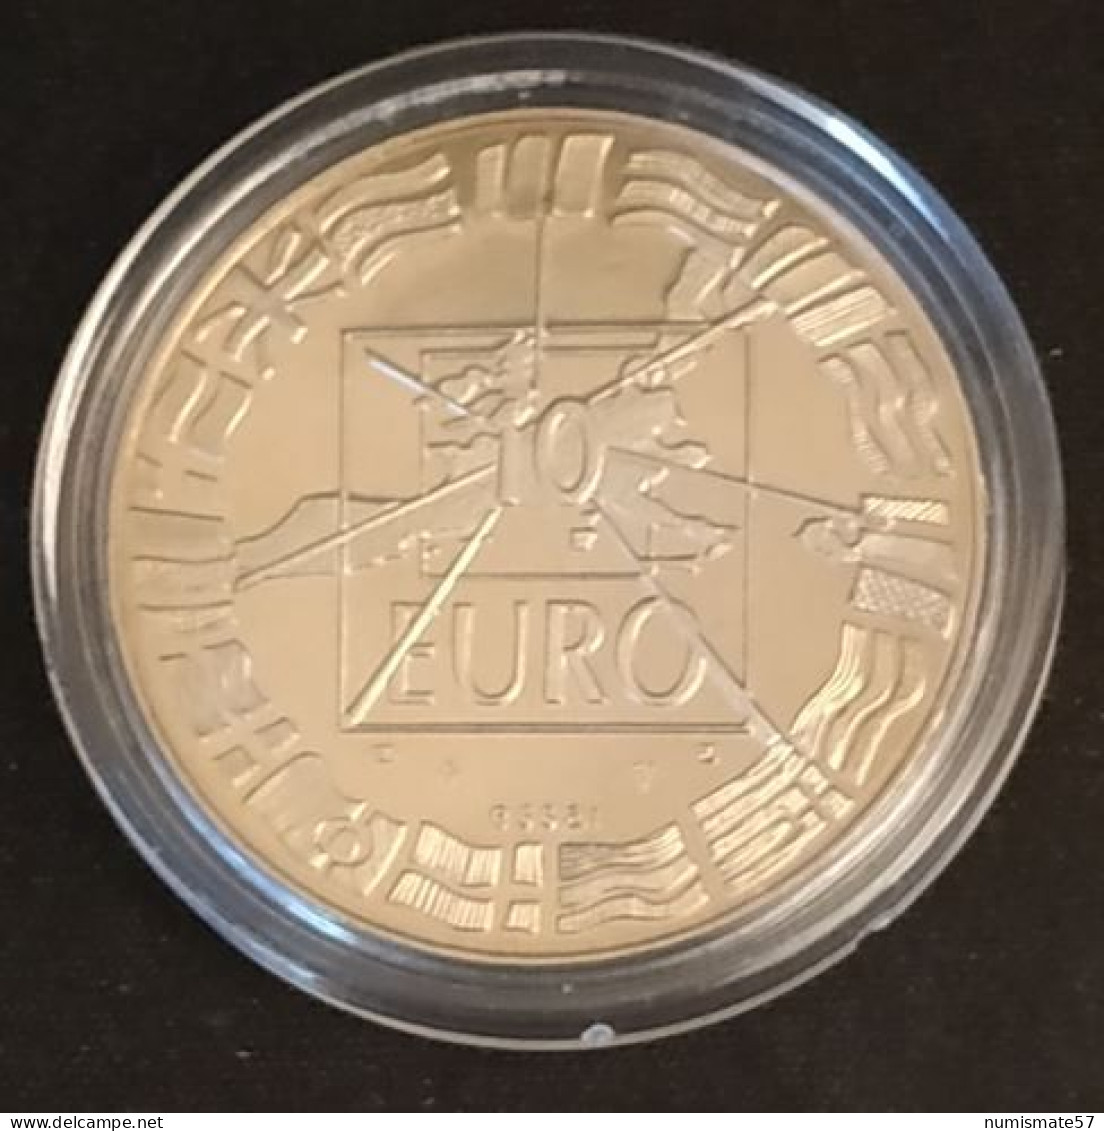 ESSAI - 10 Euros Essai 1998 - Bronze Florentin - Probedrucke